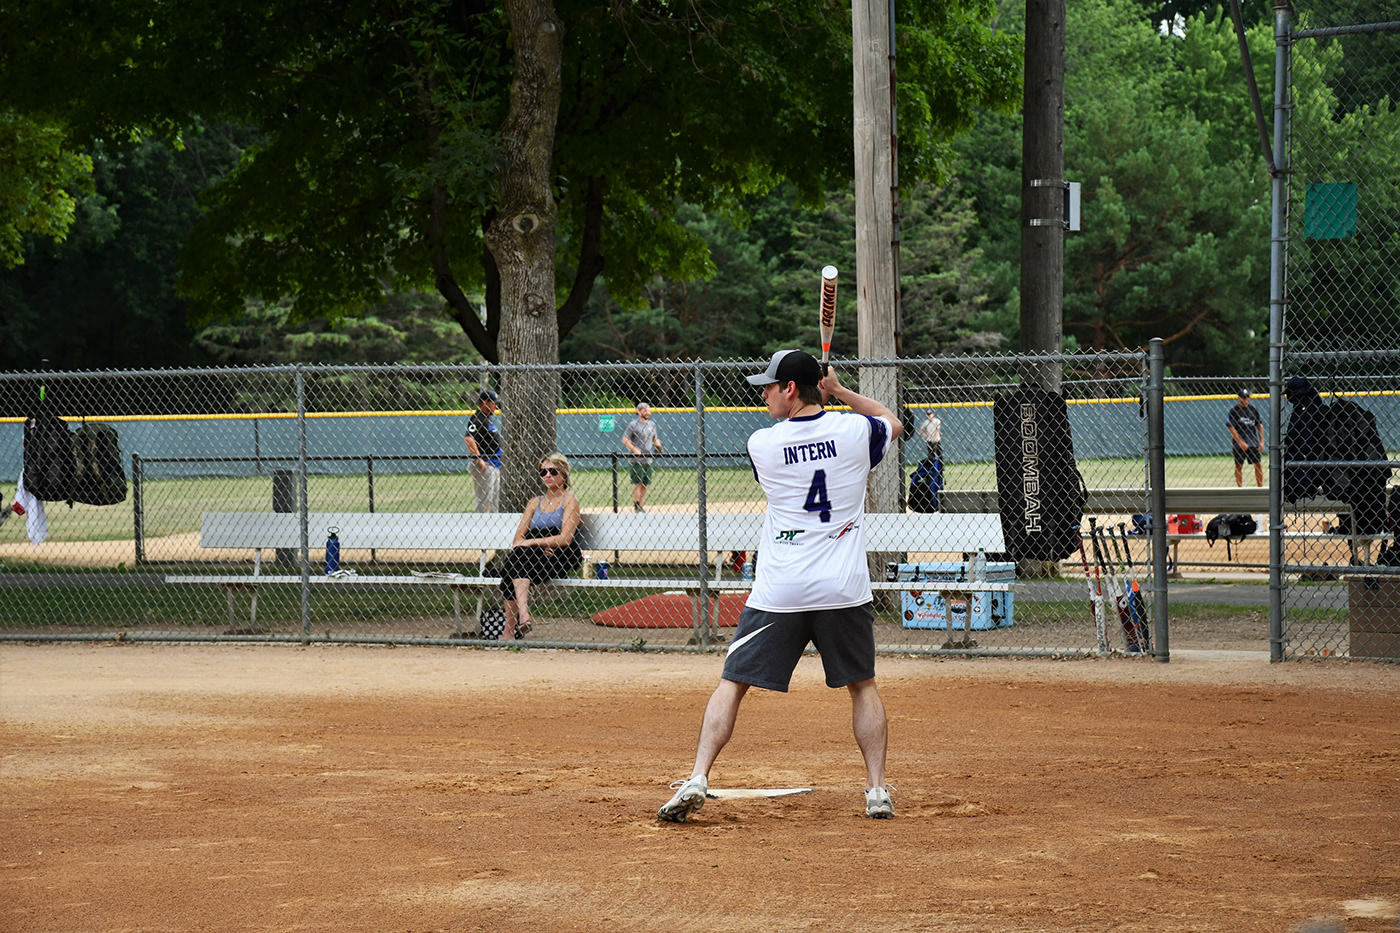 Photography  baseball action shots Nikon